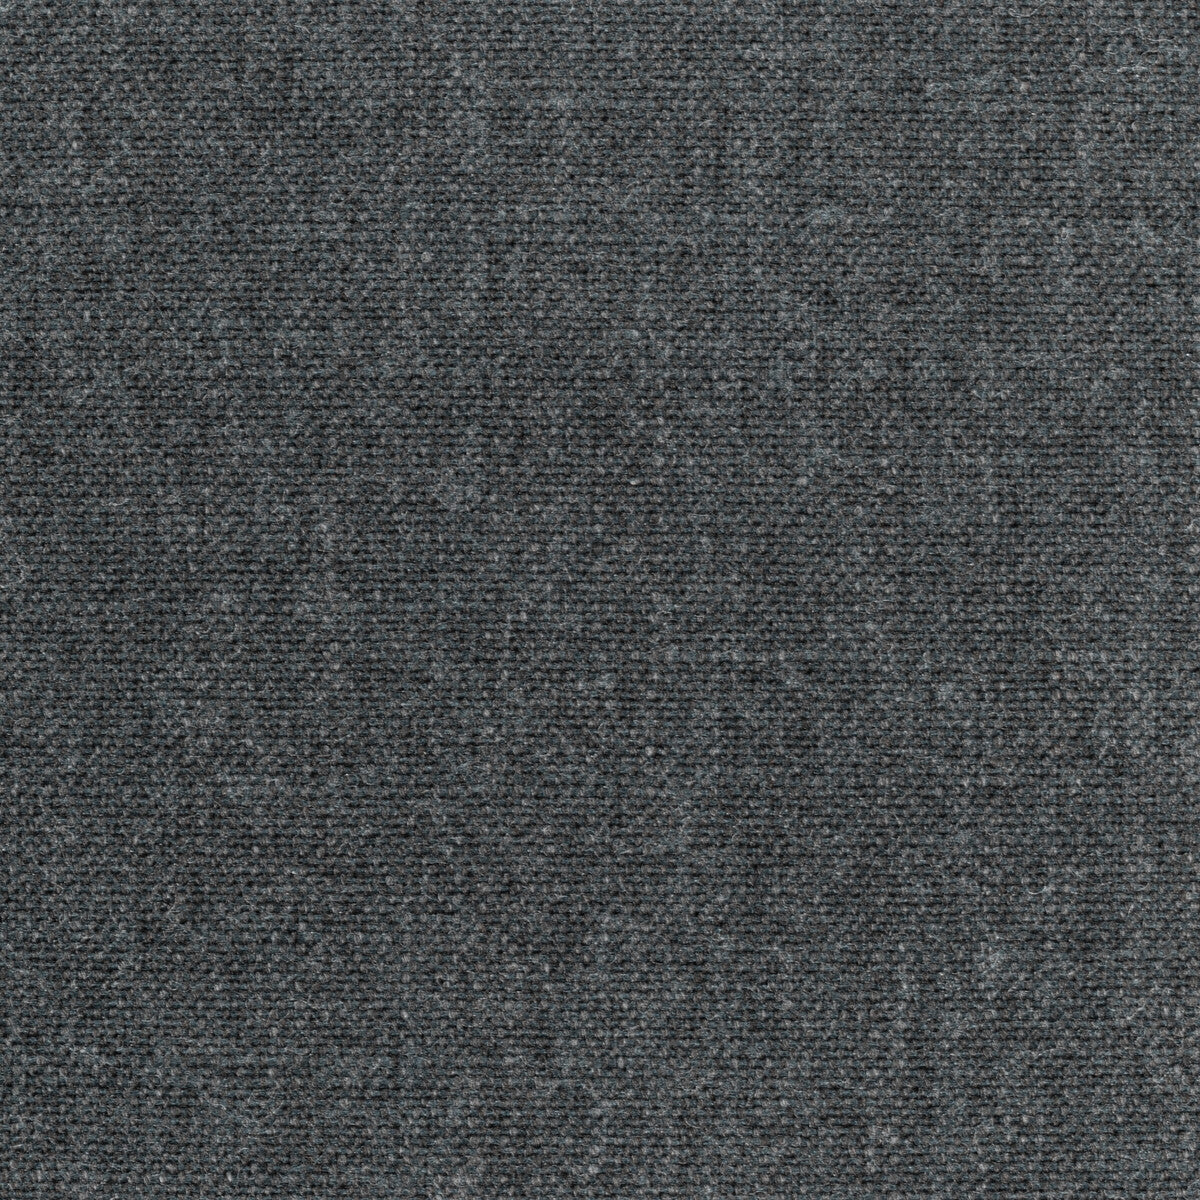 Kravet Smart fabric in 36112-21 color - pattern 36112.21.0 - by Kravet Smart in the Performance Kravetarmor collection